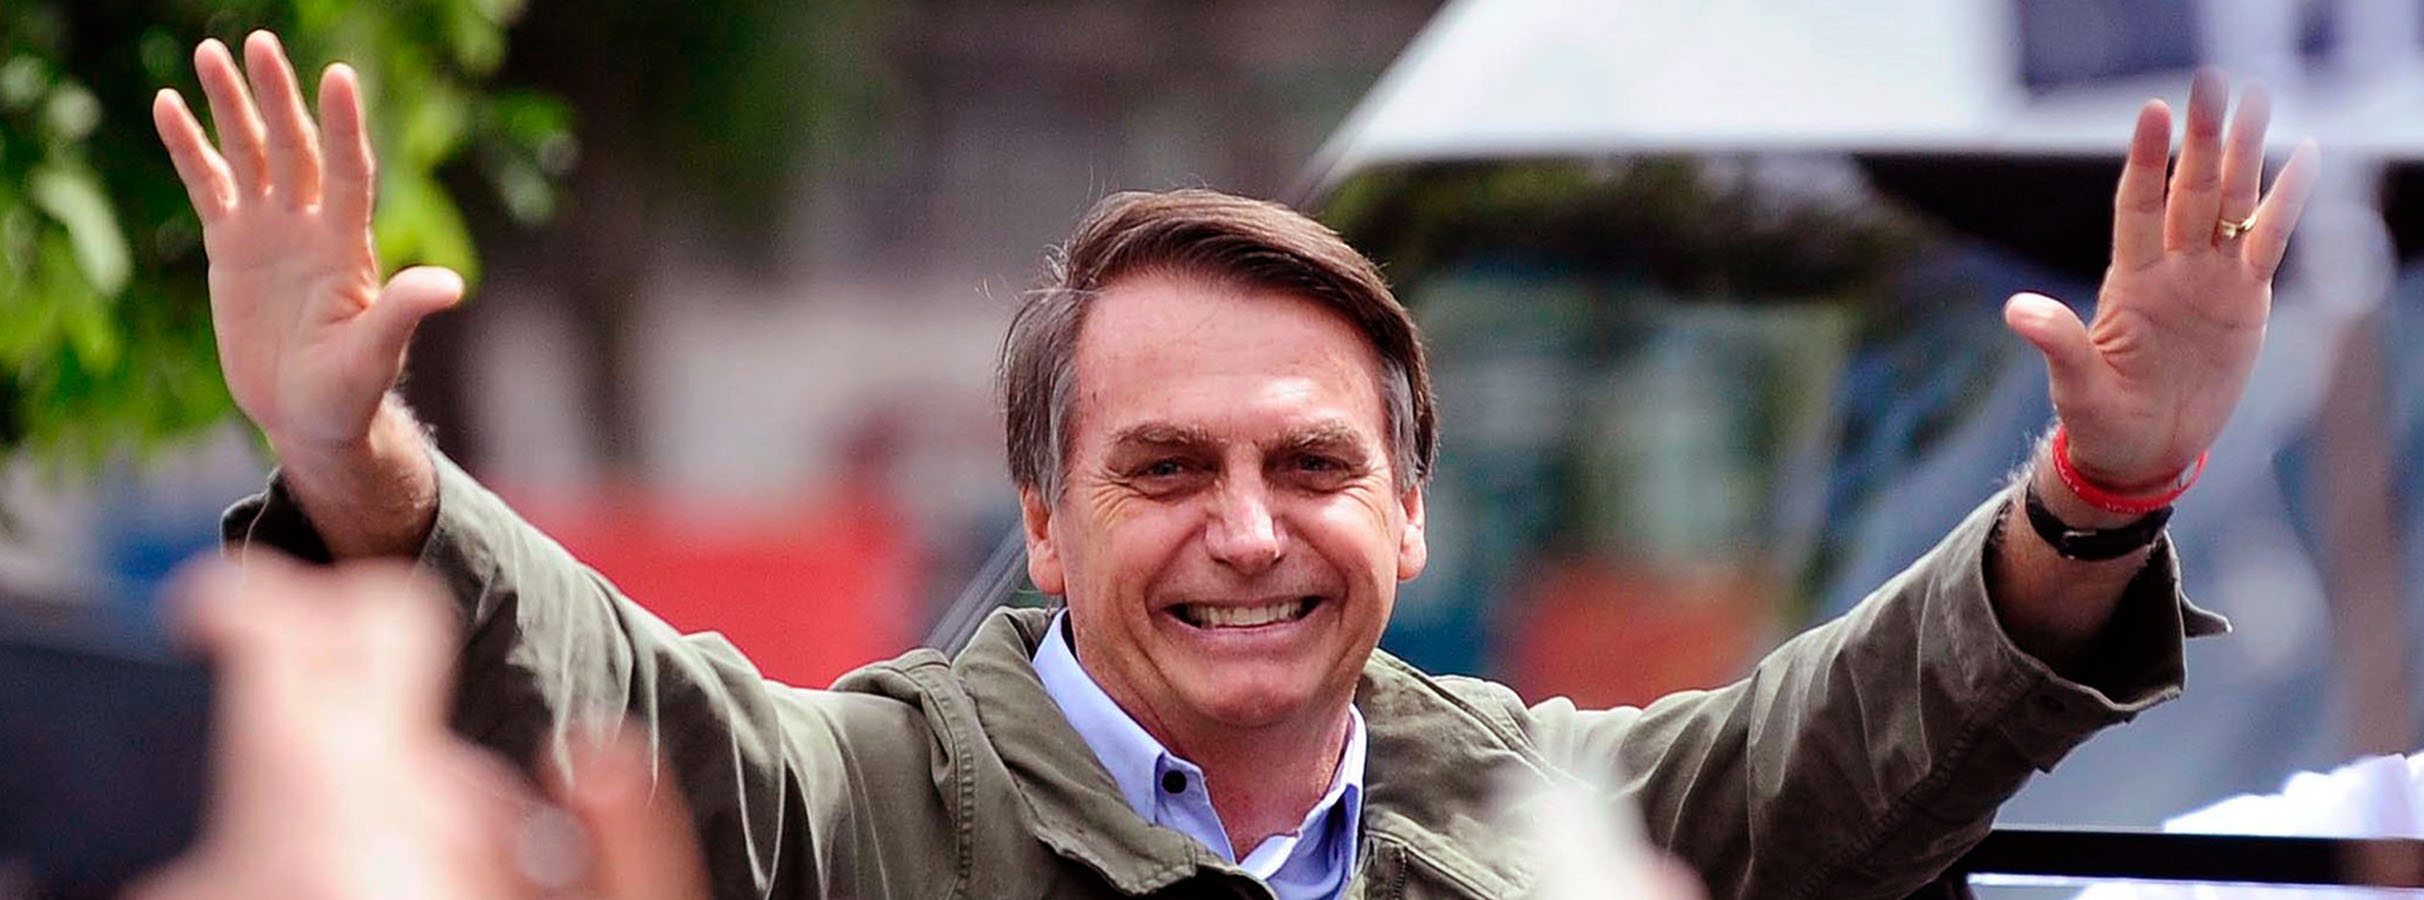 Bolsonaro eleito: o que esperar do futuro?